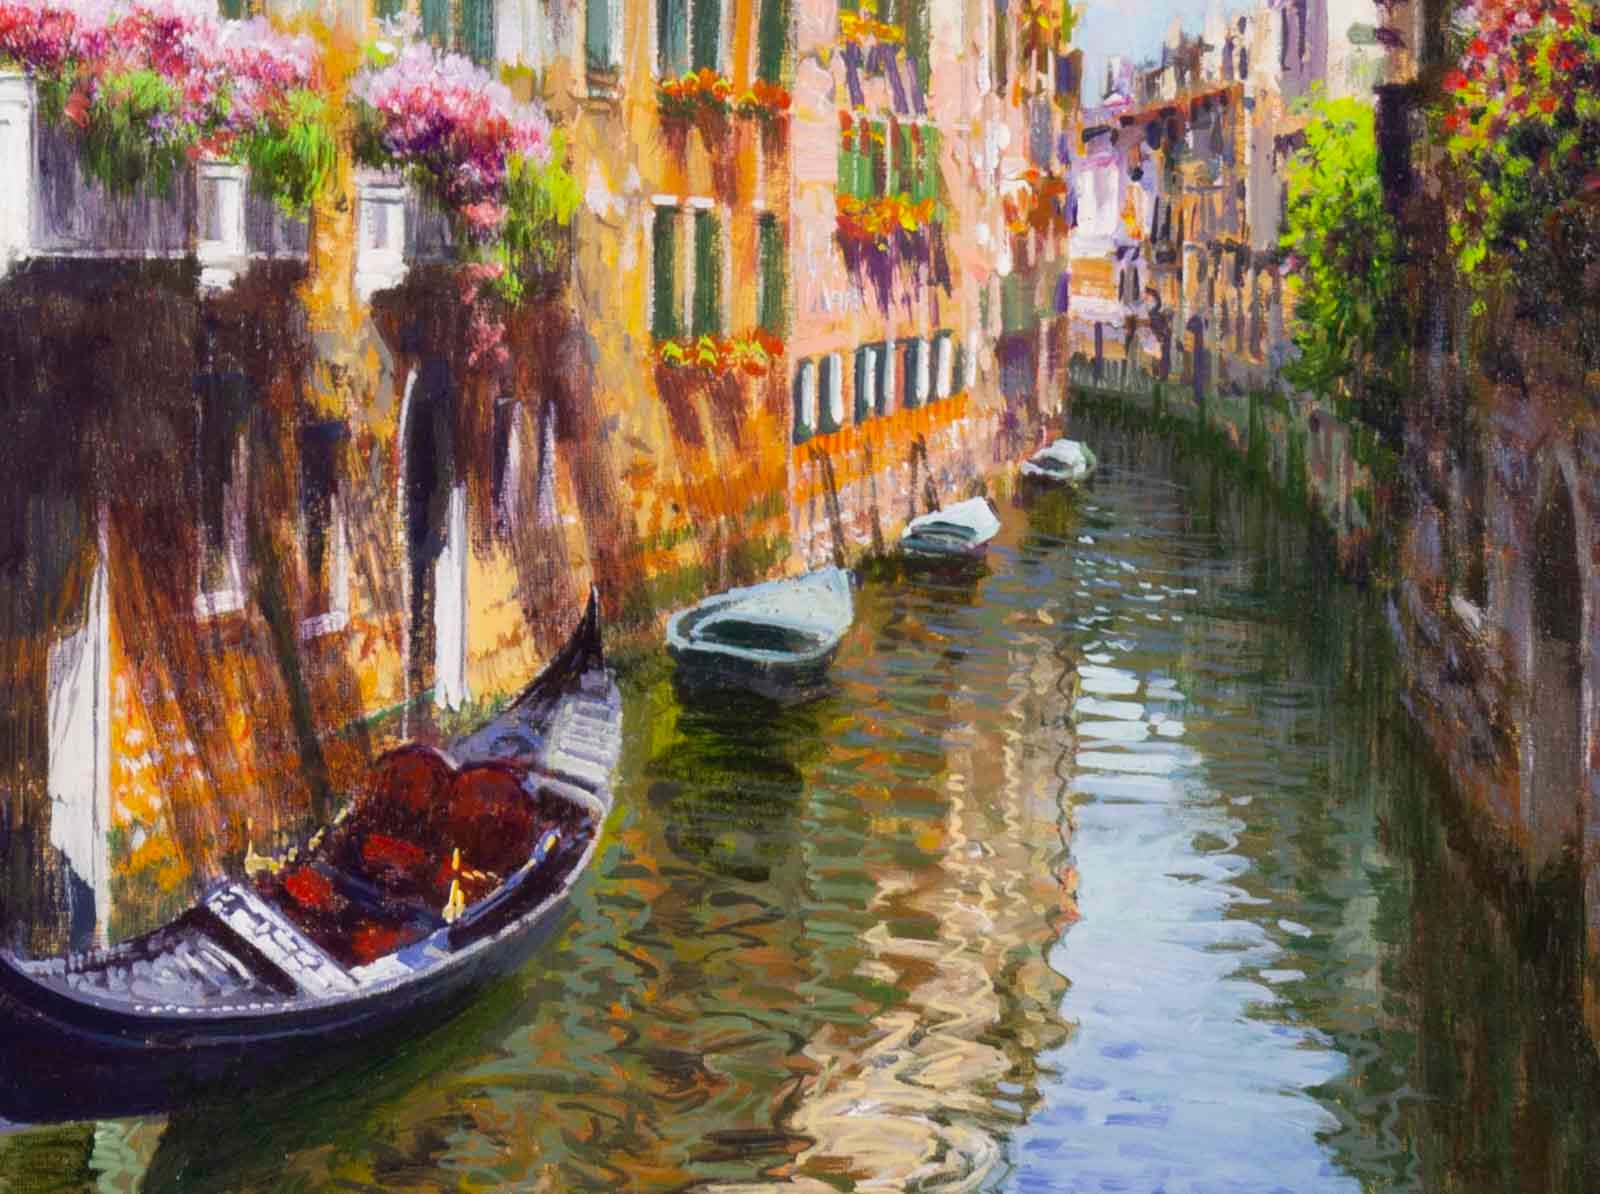 Venice in Bloom II